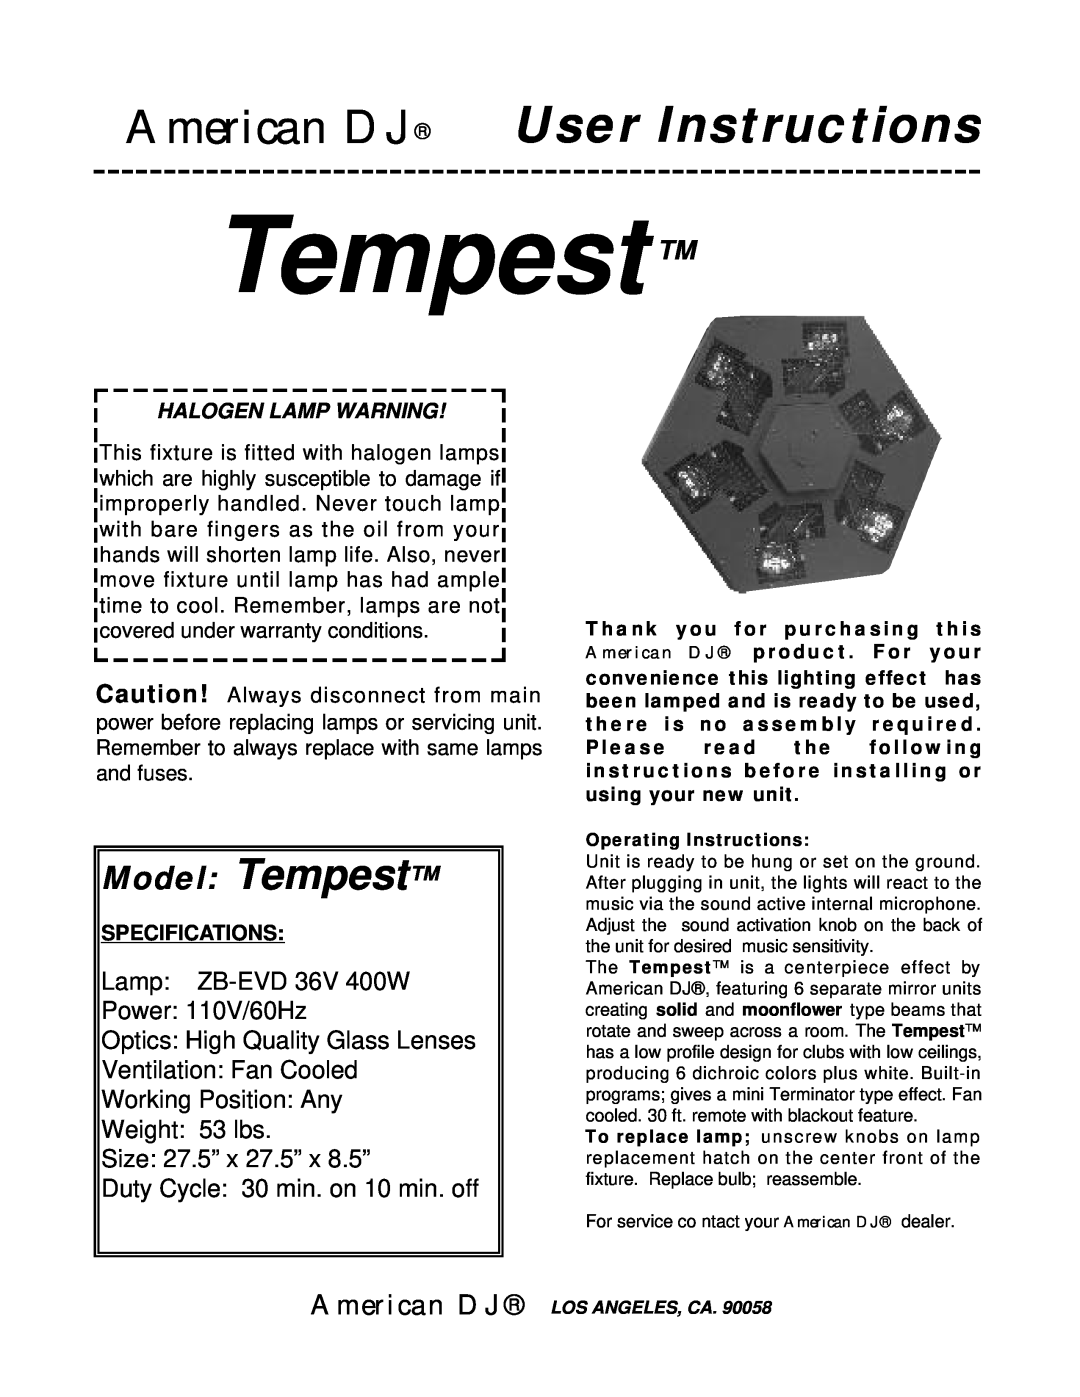 American DJ specifications American DJ User Instructions, Model Tempest, Lamp ZB-EVD36V 400W Power 110V/60Hz 